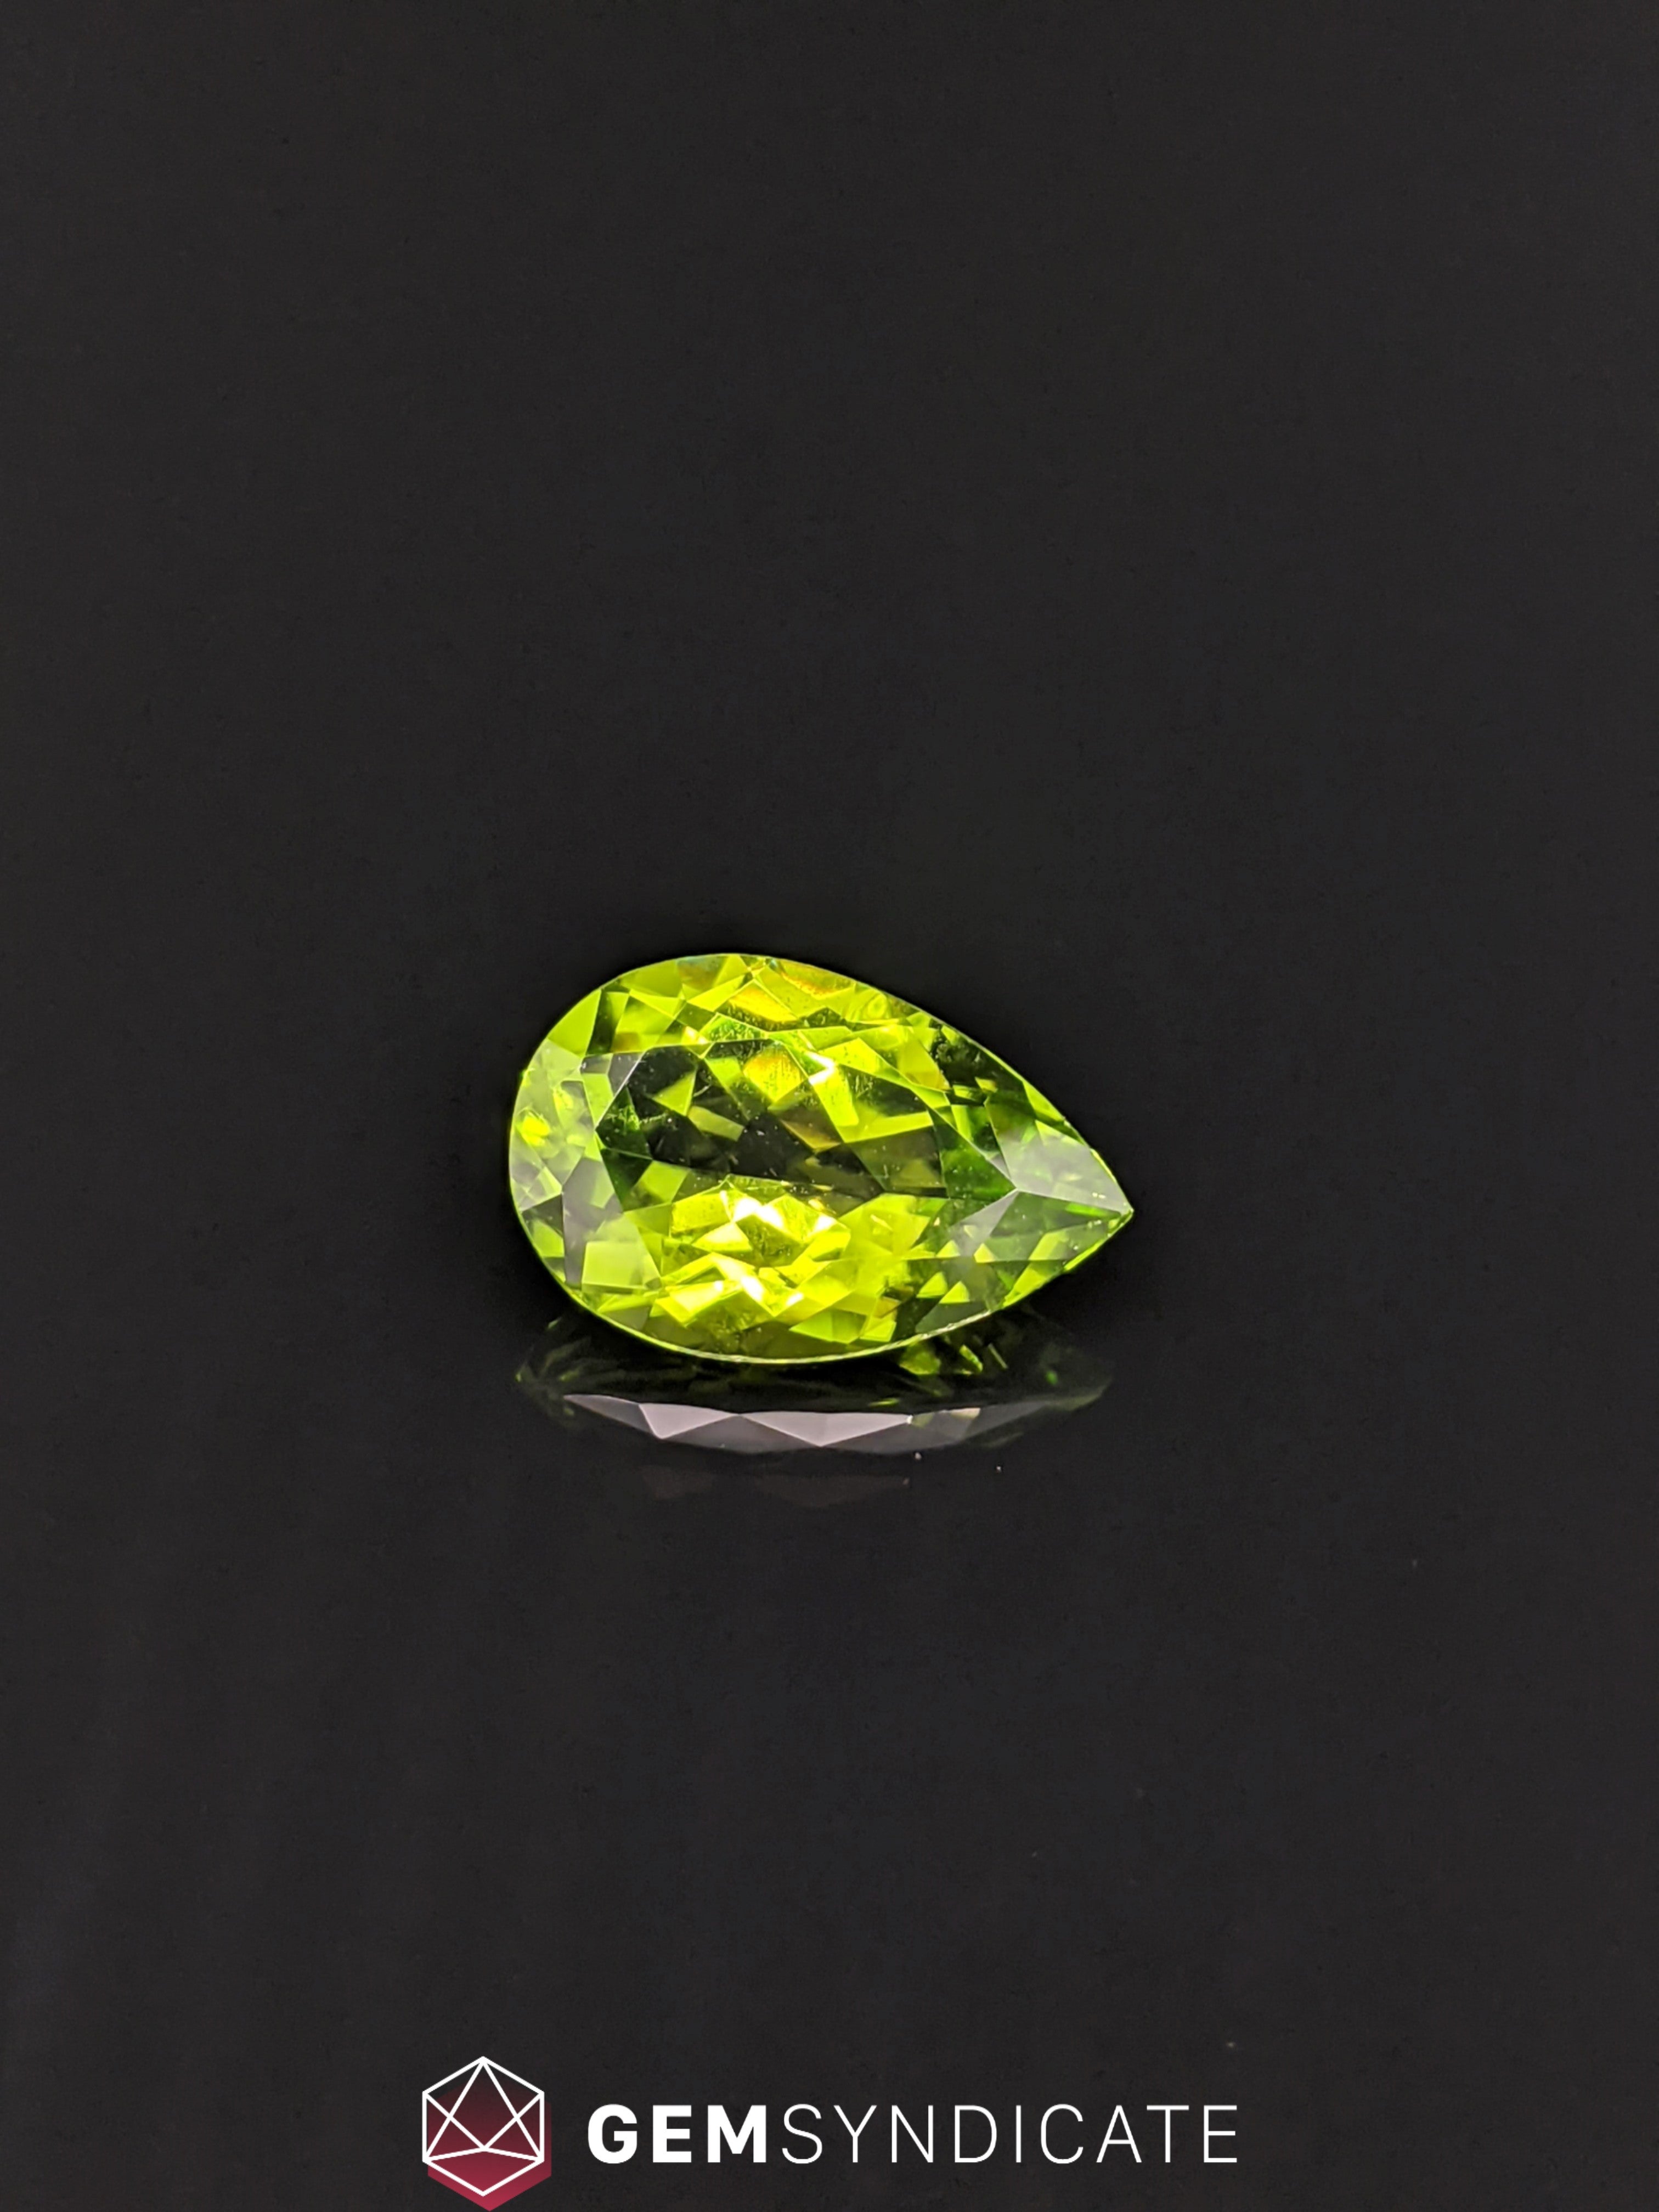 Gorgeous Pear Shape Green Peridot 5.61ct